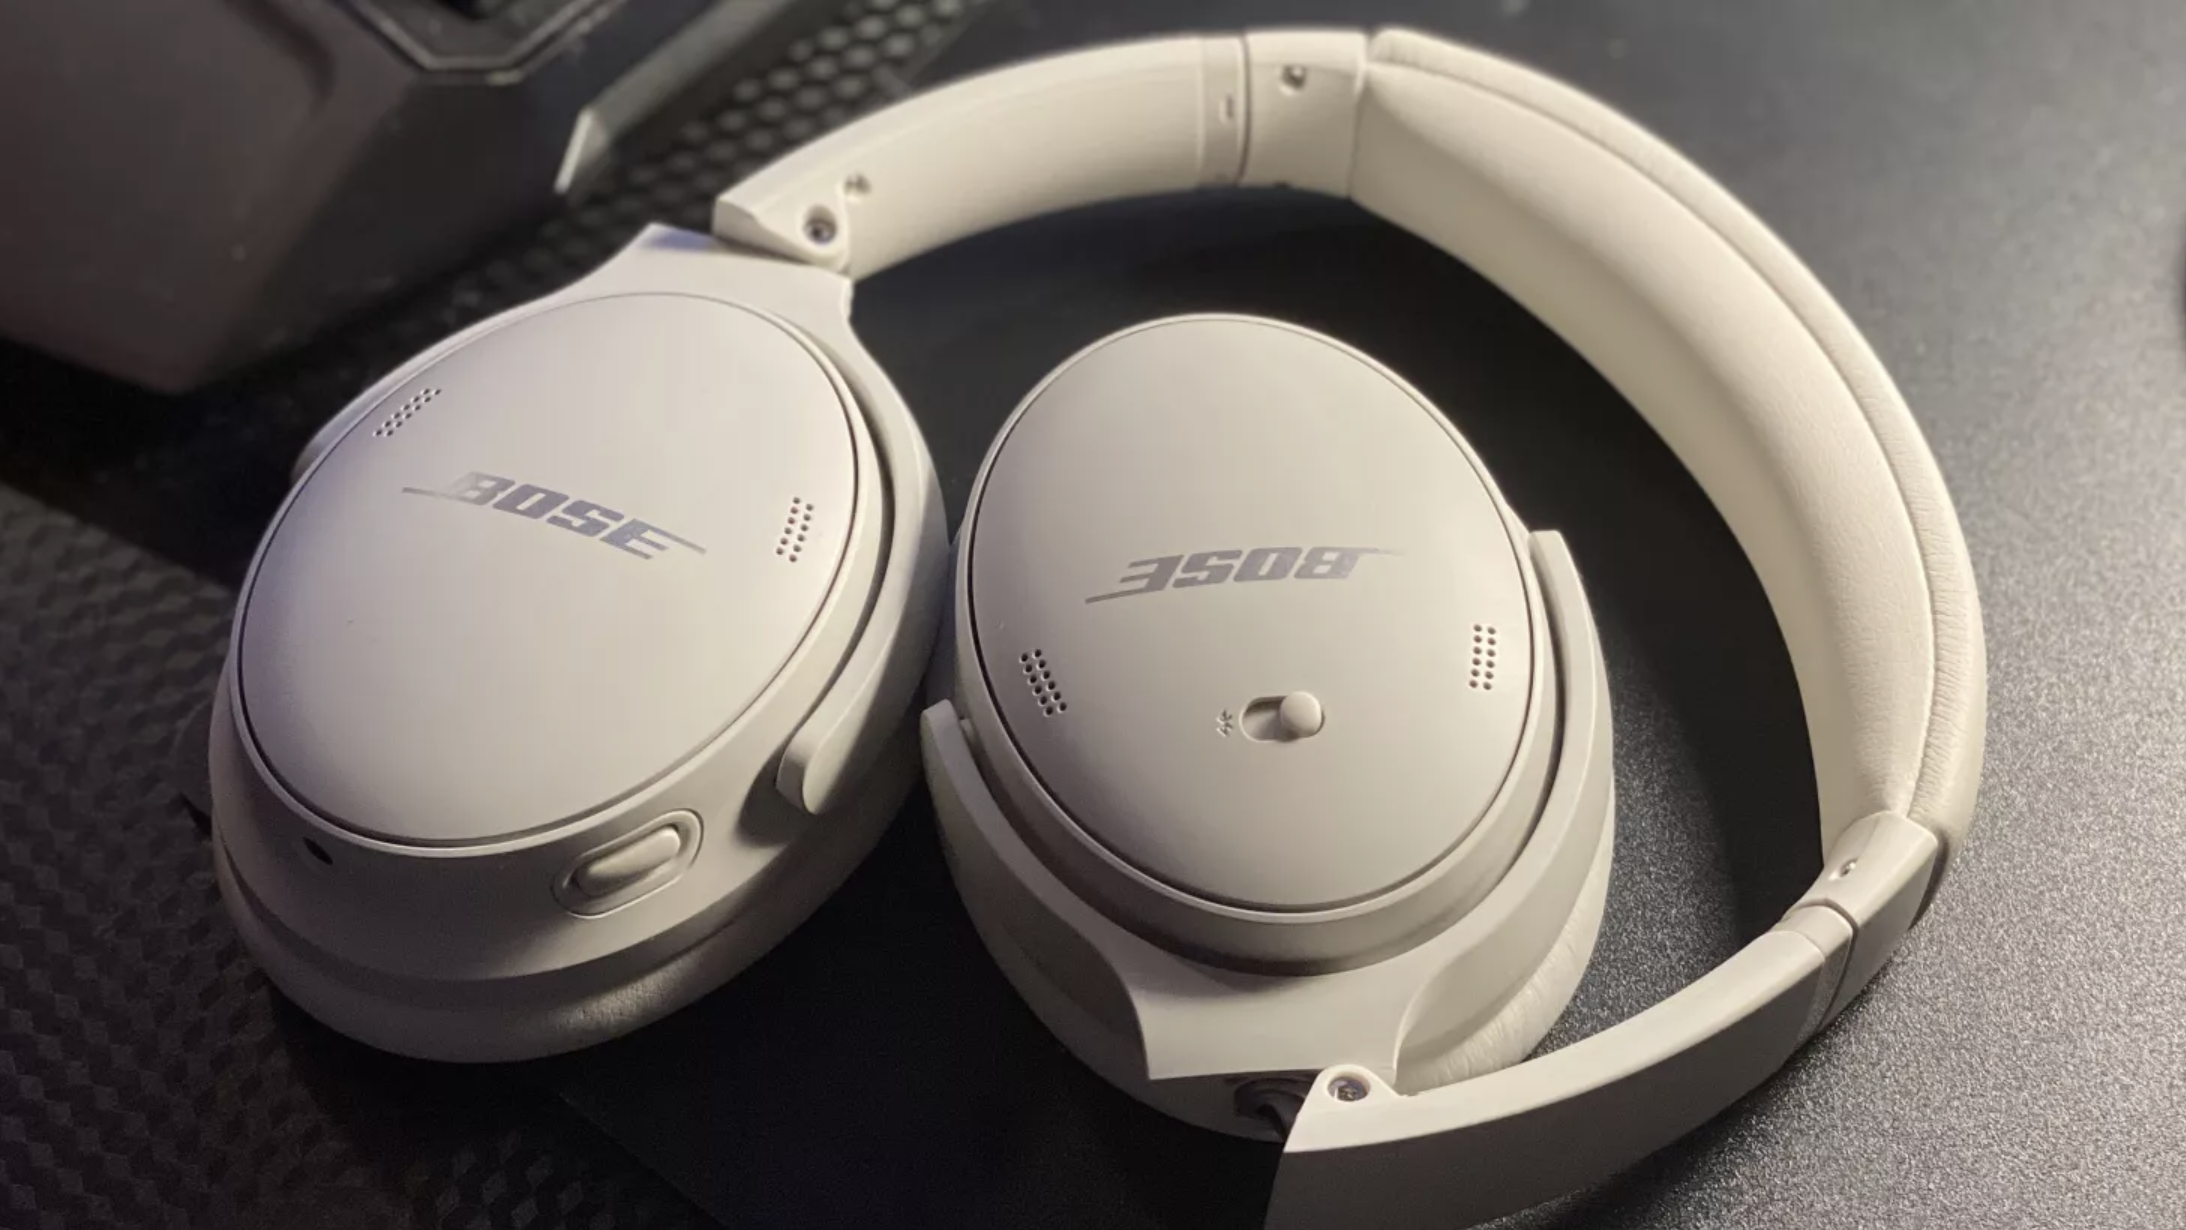 The Bose quietcomfort 45 wireless headphones in white